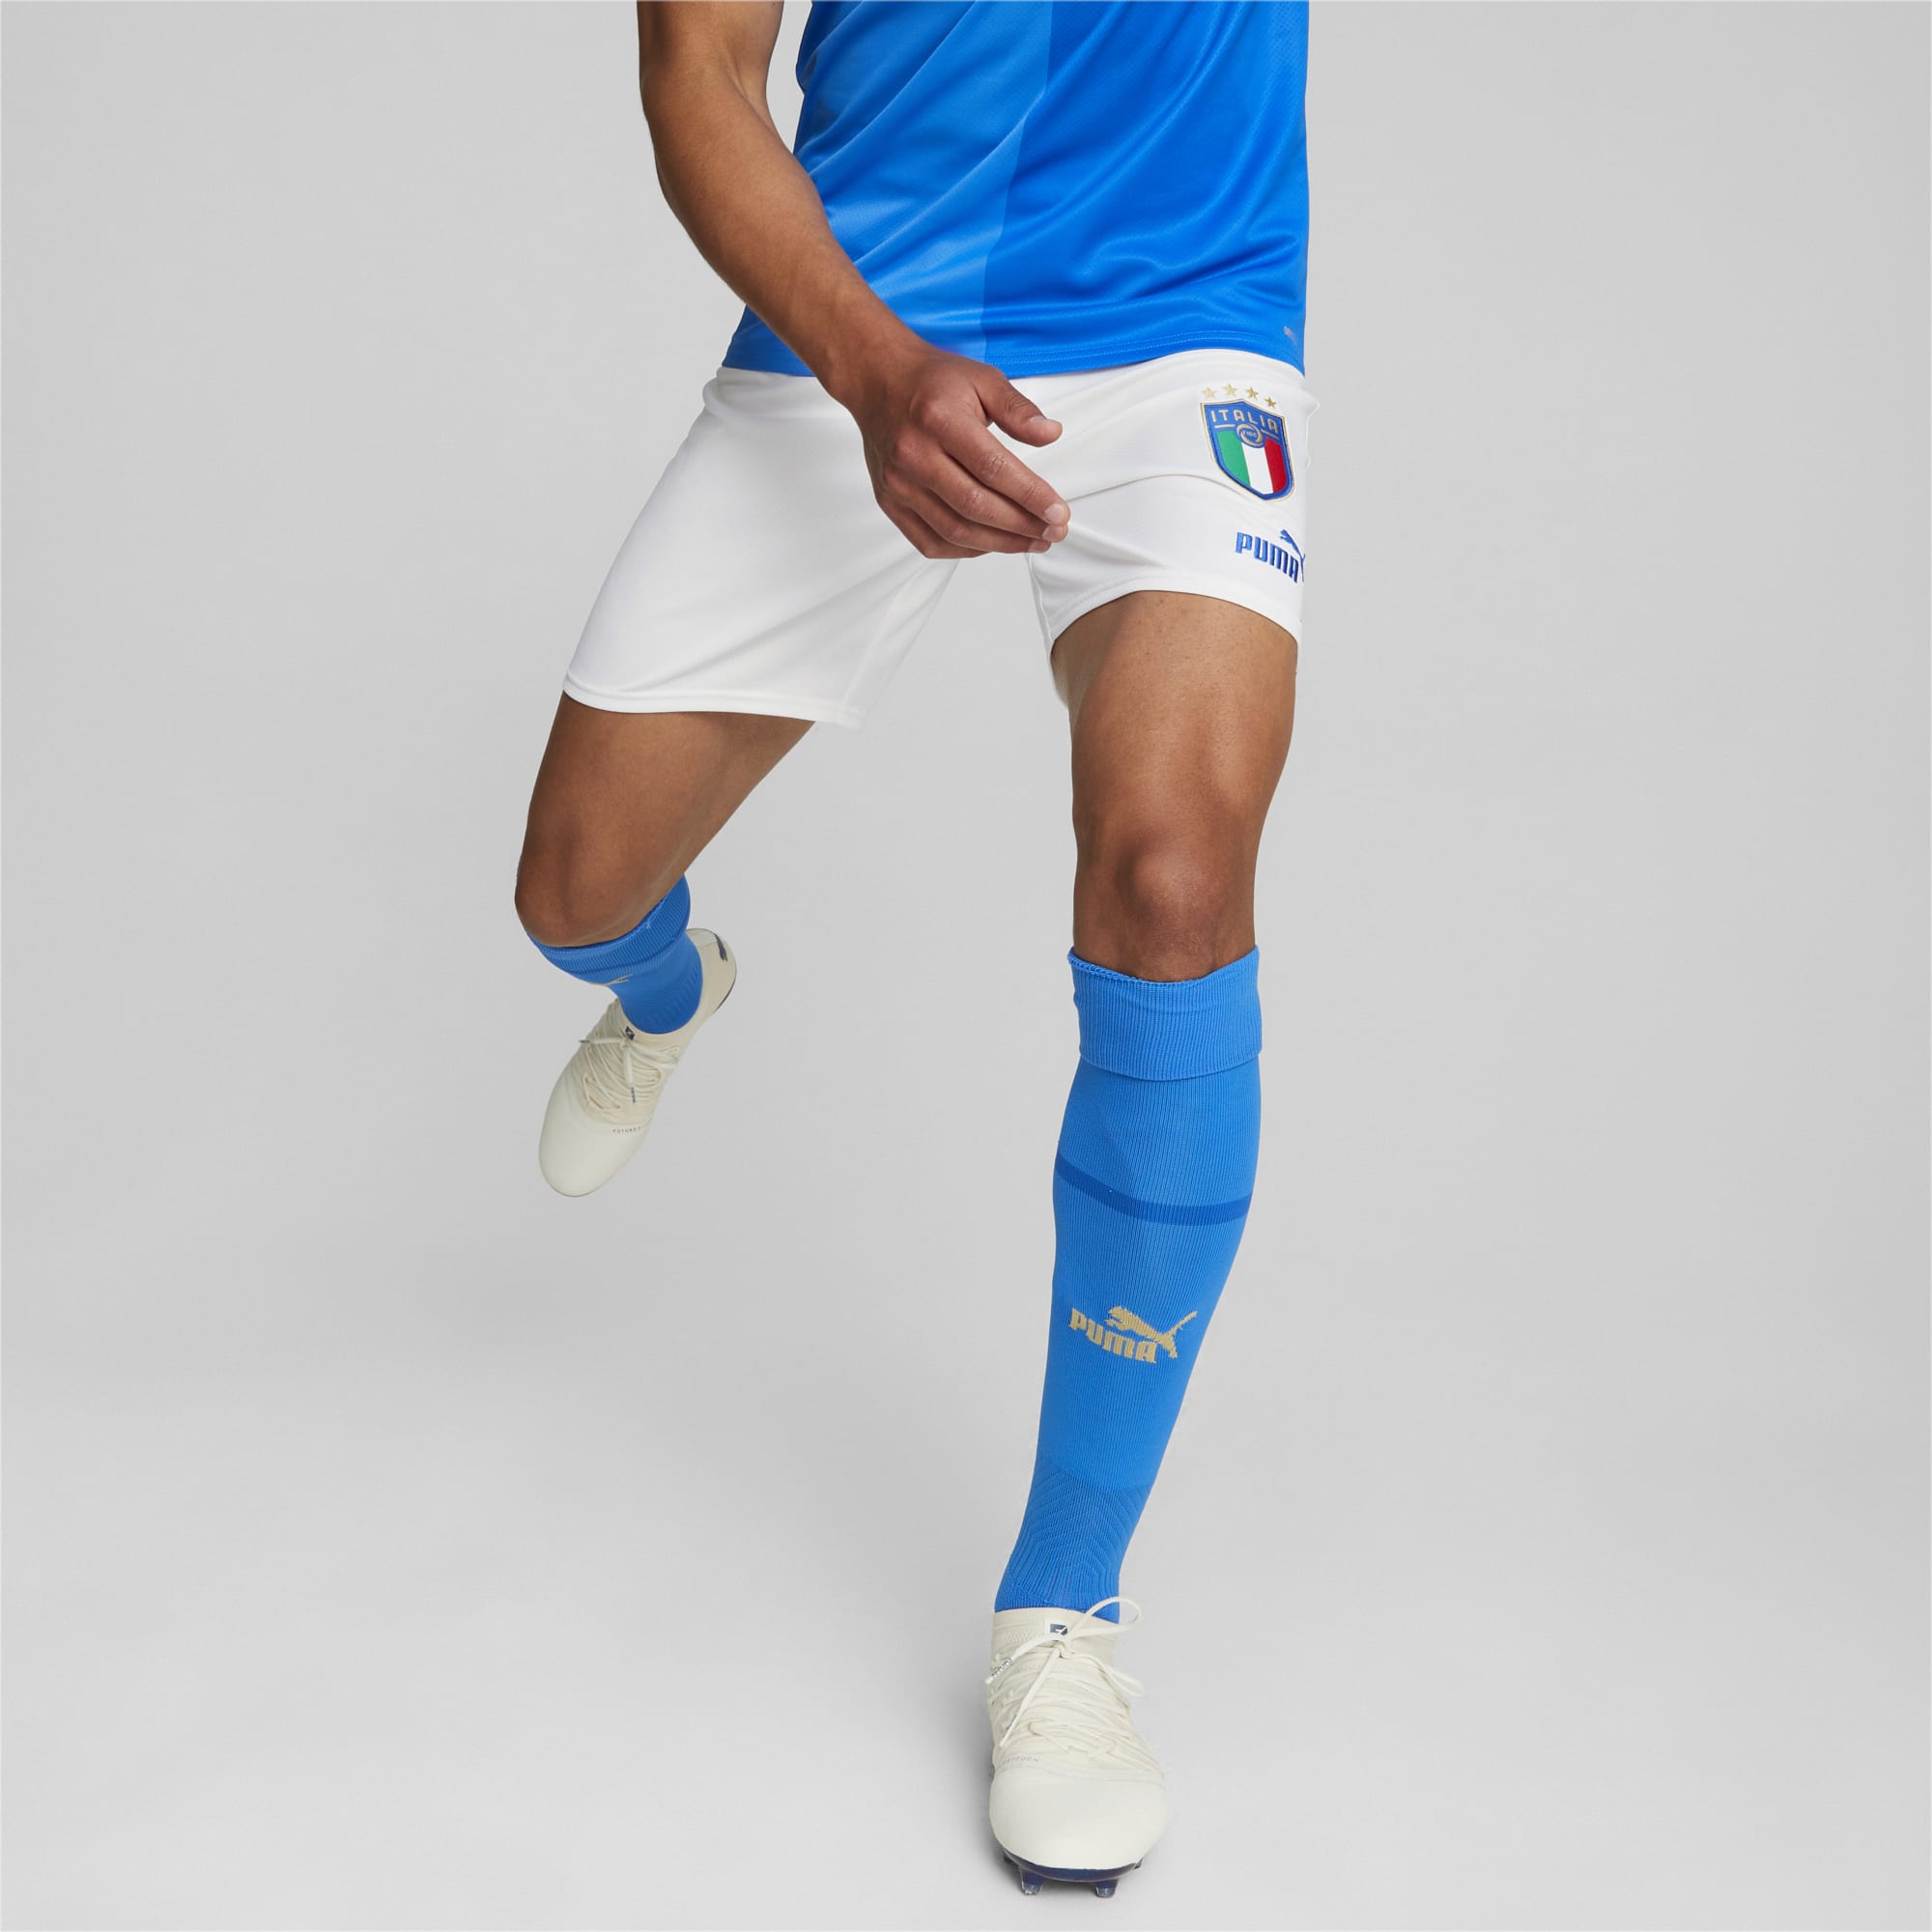 PUMA Kids Boys Italy Away 2223 Replica Crew Neck Short Sleeve Jersey Soccer  Cleats Moisture Wicking - White